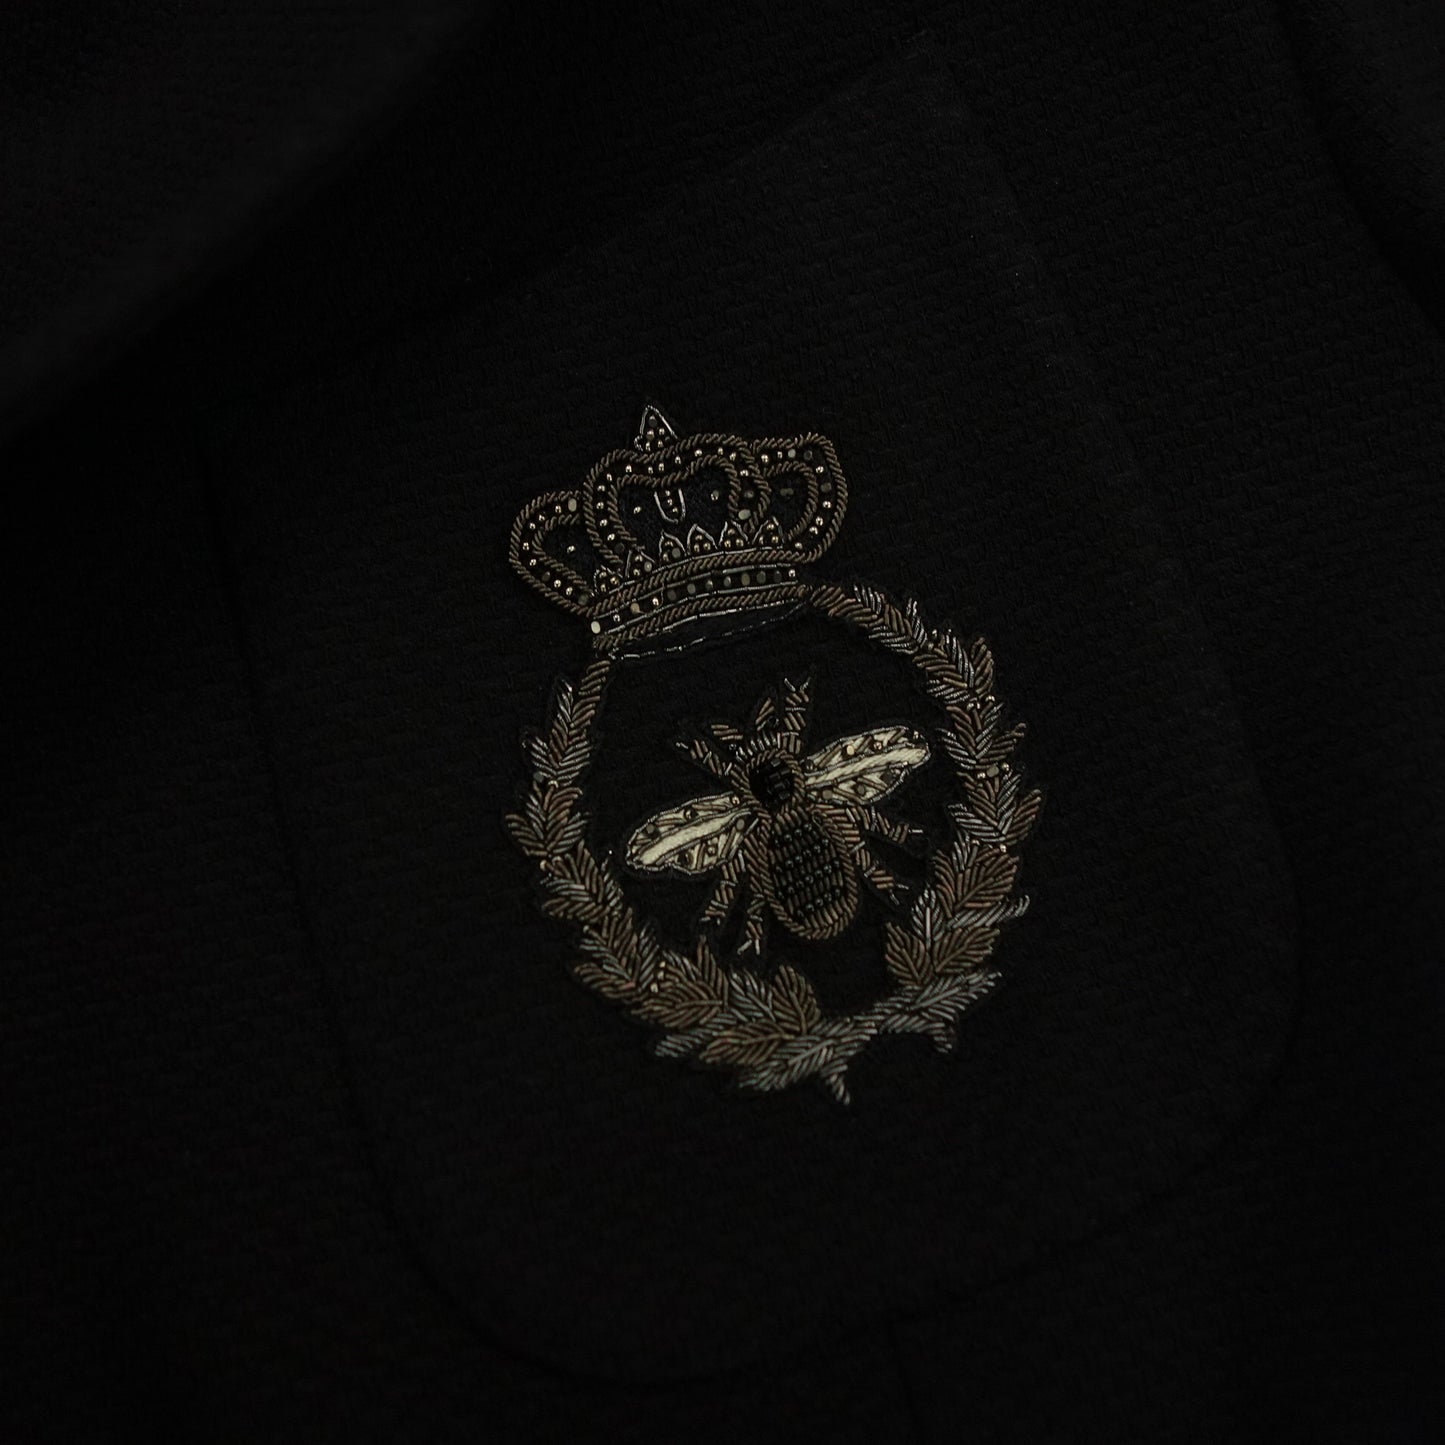 Dolce &amp; Gabbana Tailored Jacket Patch Men's 46 Black DOLCE&amp;GABBANA [AFB13] [Used] 